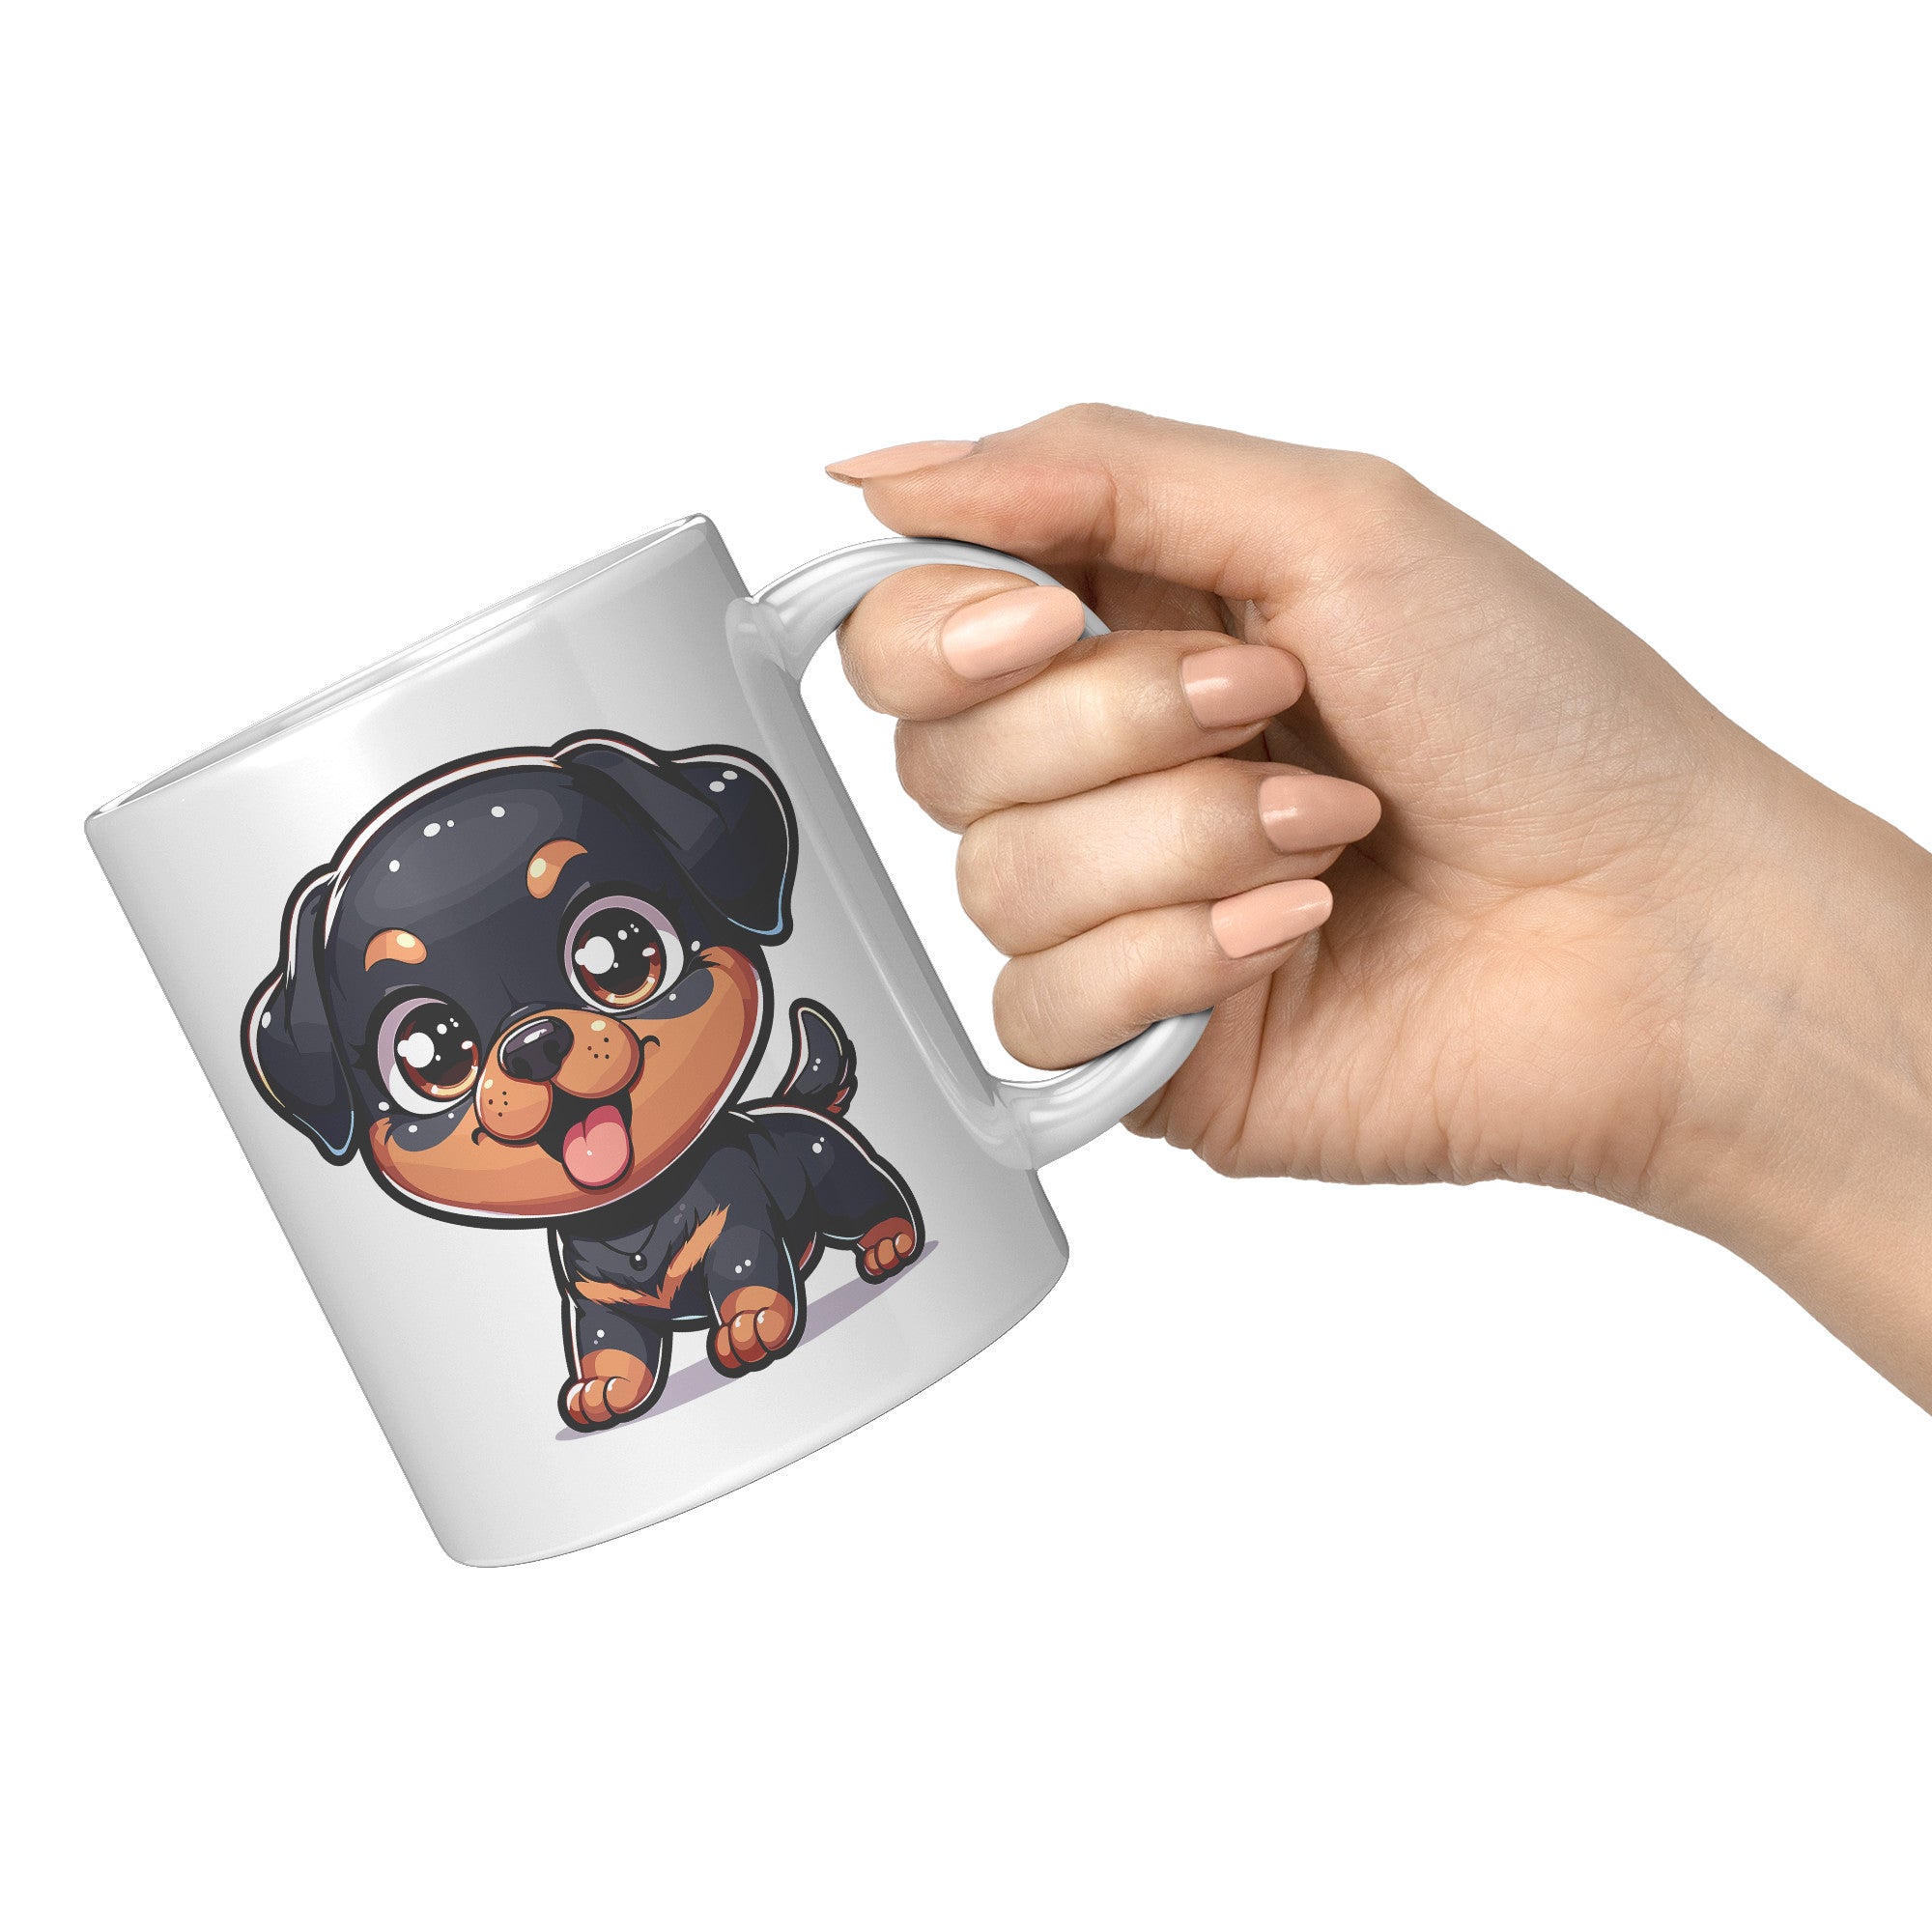 11oz Rottweiler Cartoon Coffee Mug - Bold Rottie Lover Coffee Mug - Perfect Gift for Rottweiler Owners - Strong and Loyal Dog Coffee Mug" - F